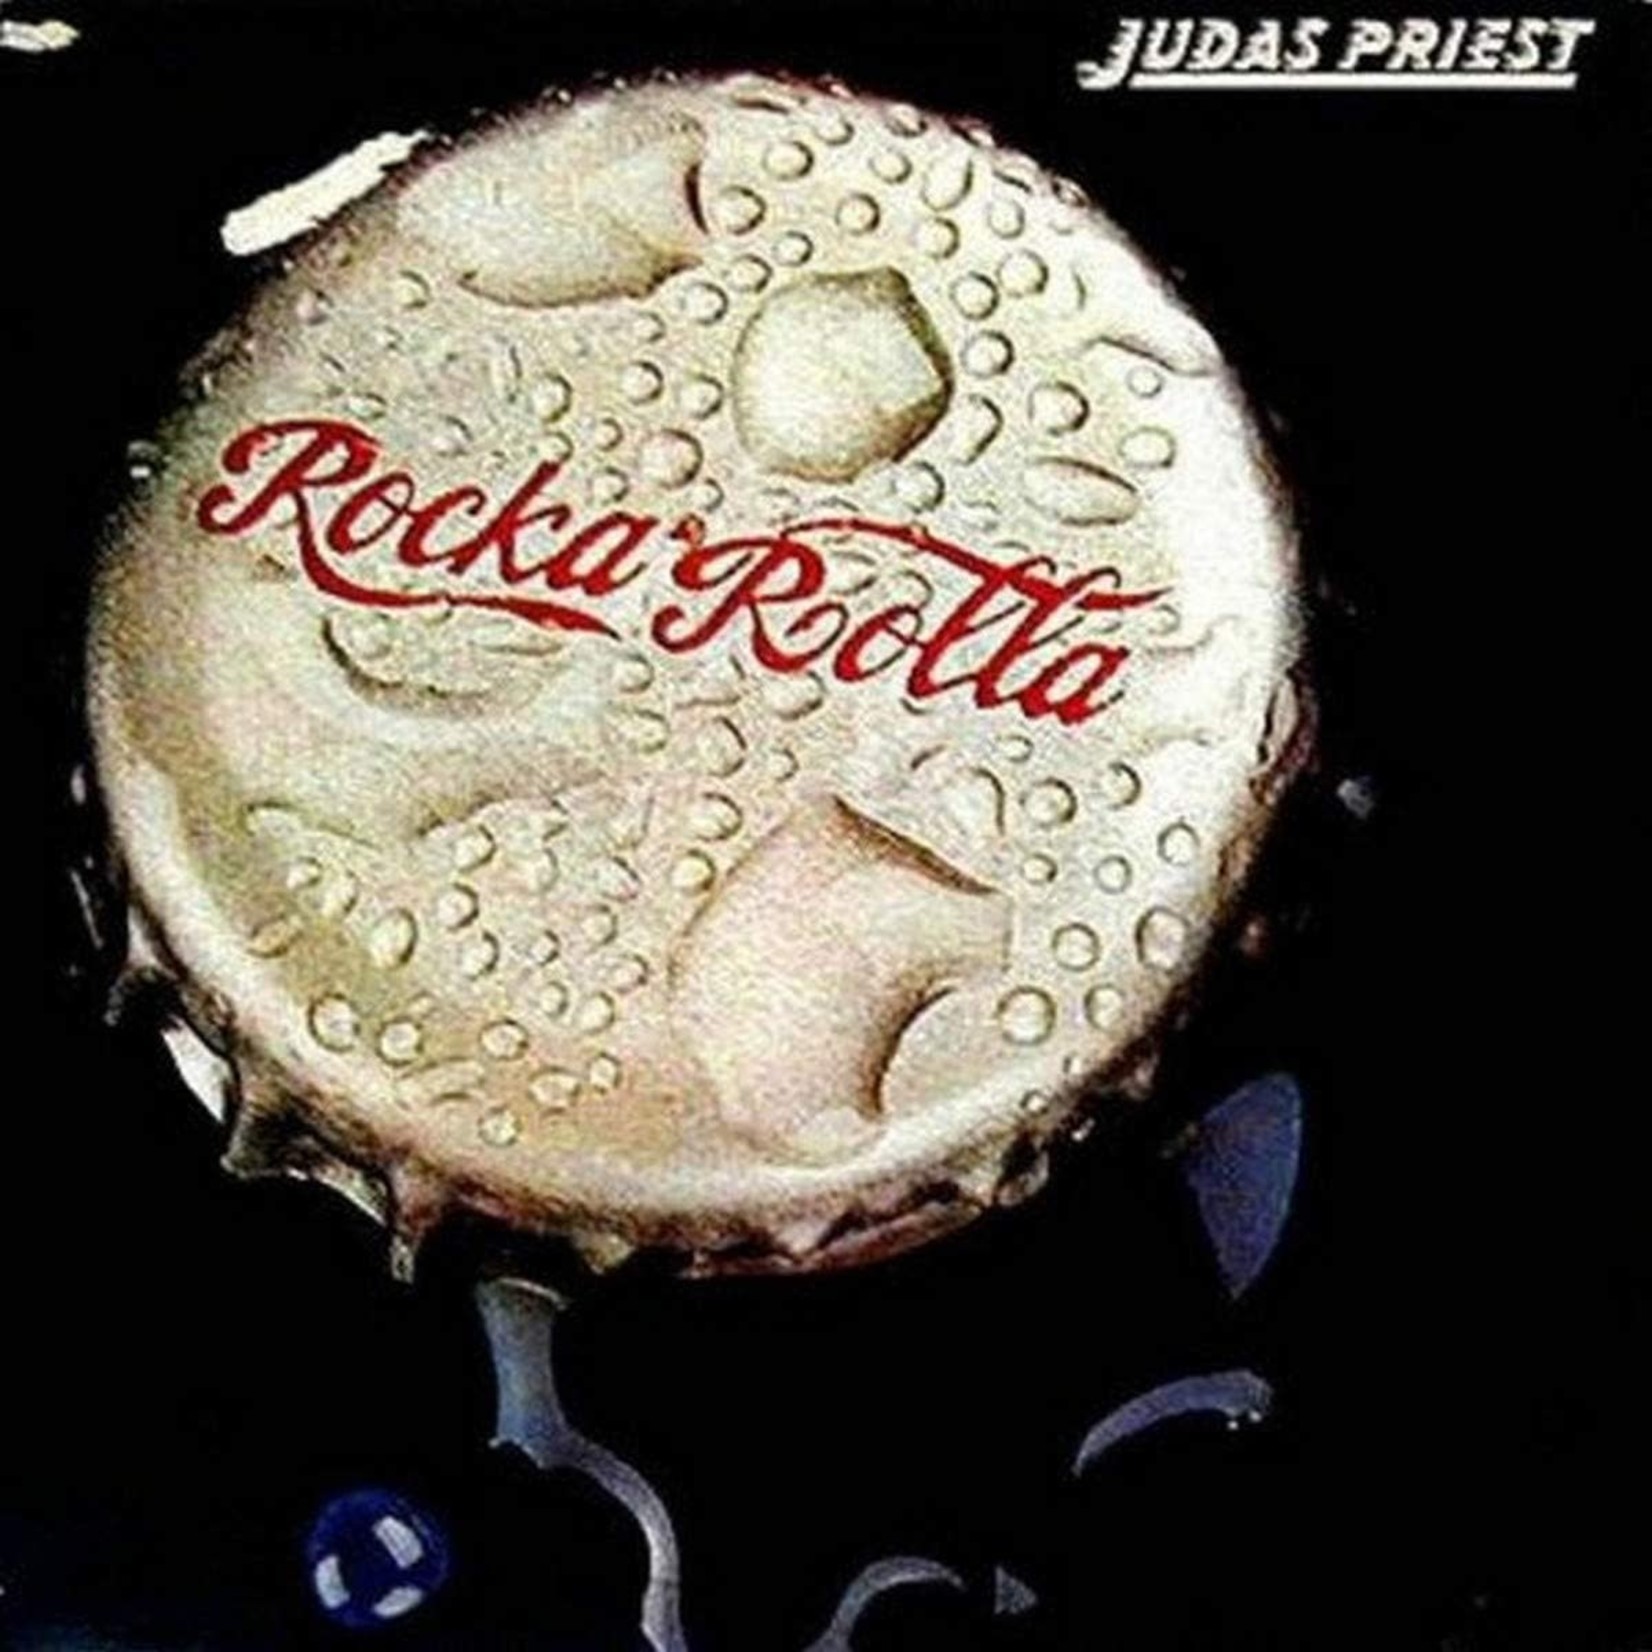 Vinyl Judas Priest - Rocka Rolla